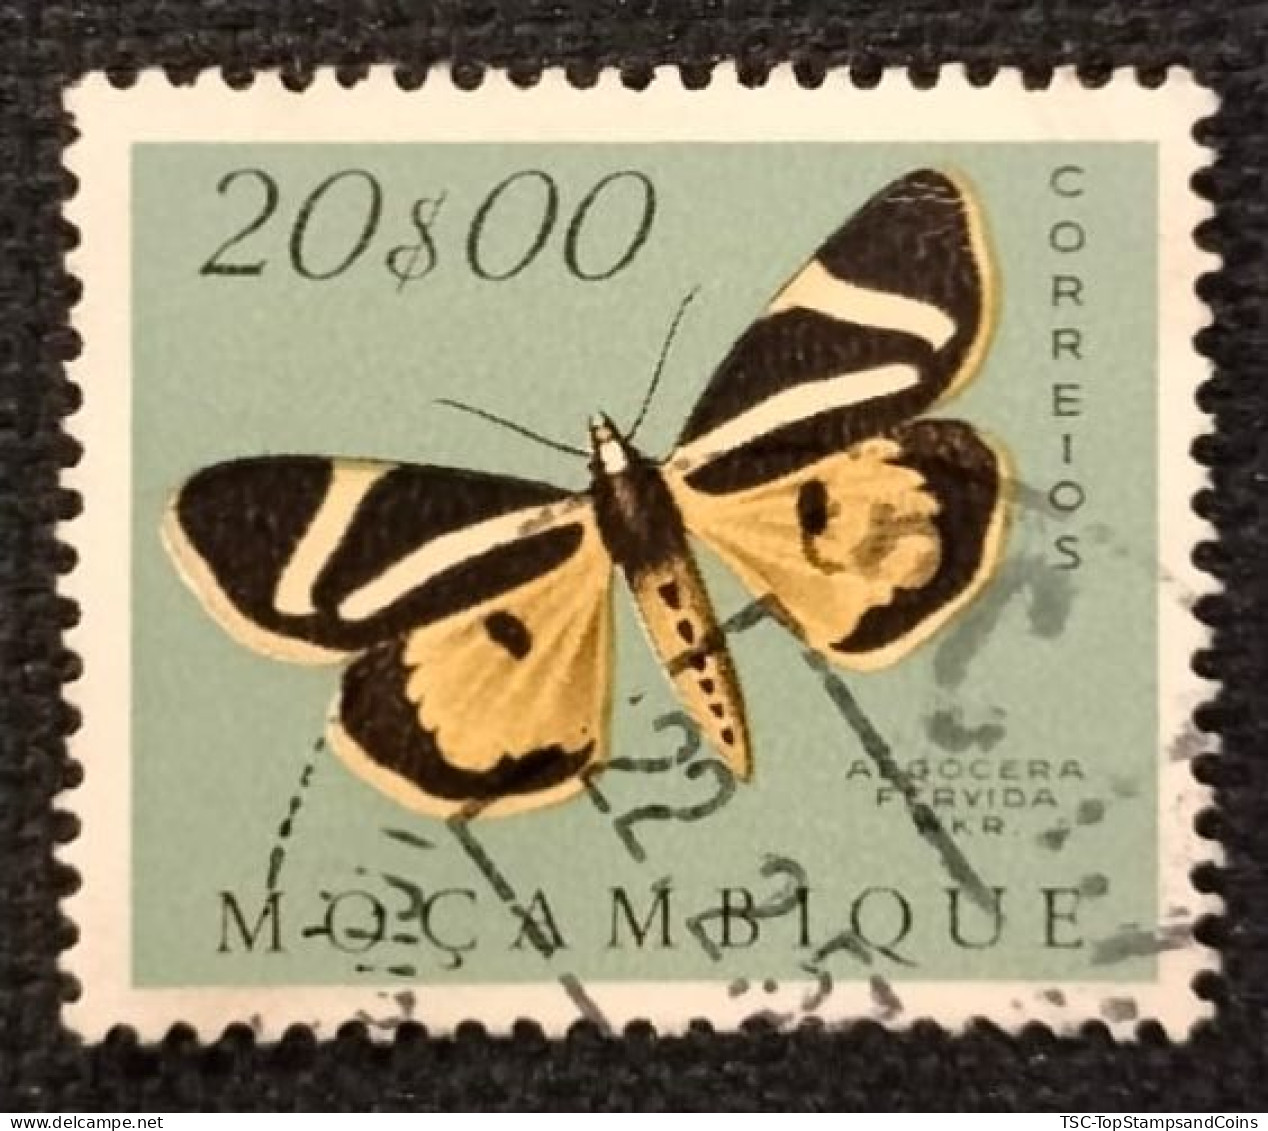 MOZPO0407U7 - Mozambique Butterflies - 20$00 Used Stamp - Mozambique - 1953 - Mozambique